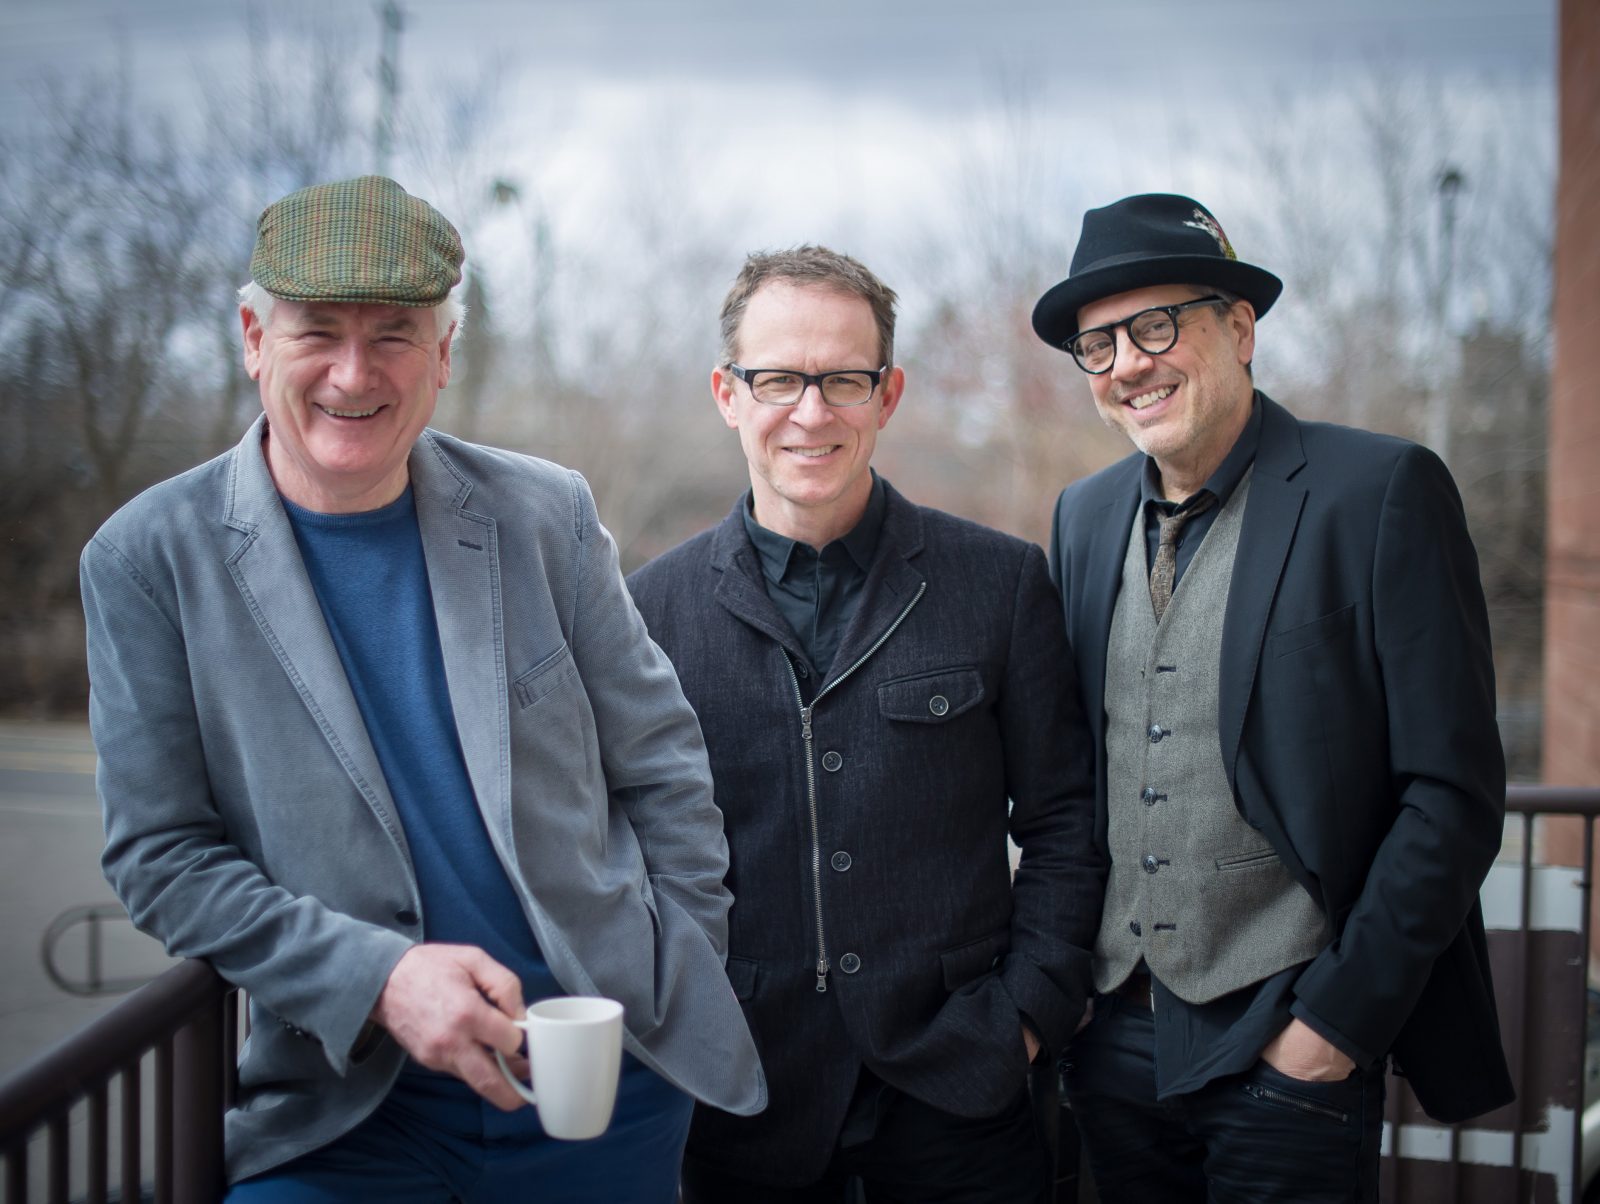 John McDermott Trio coming to Cornwall